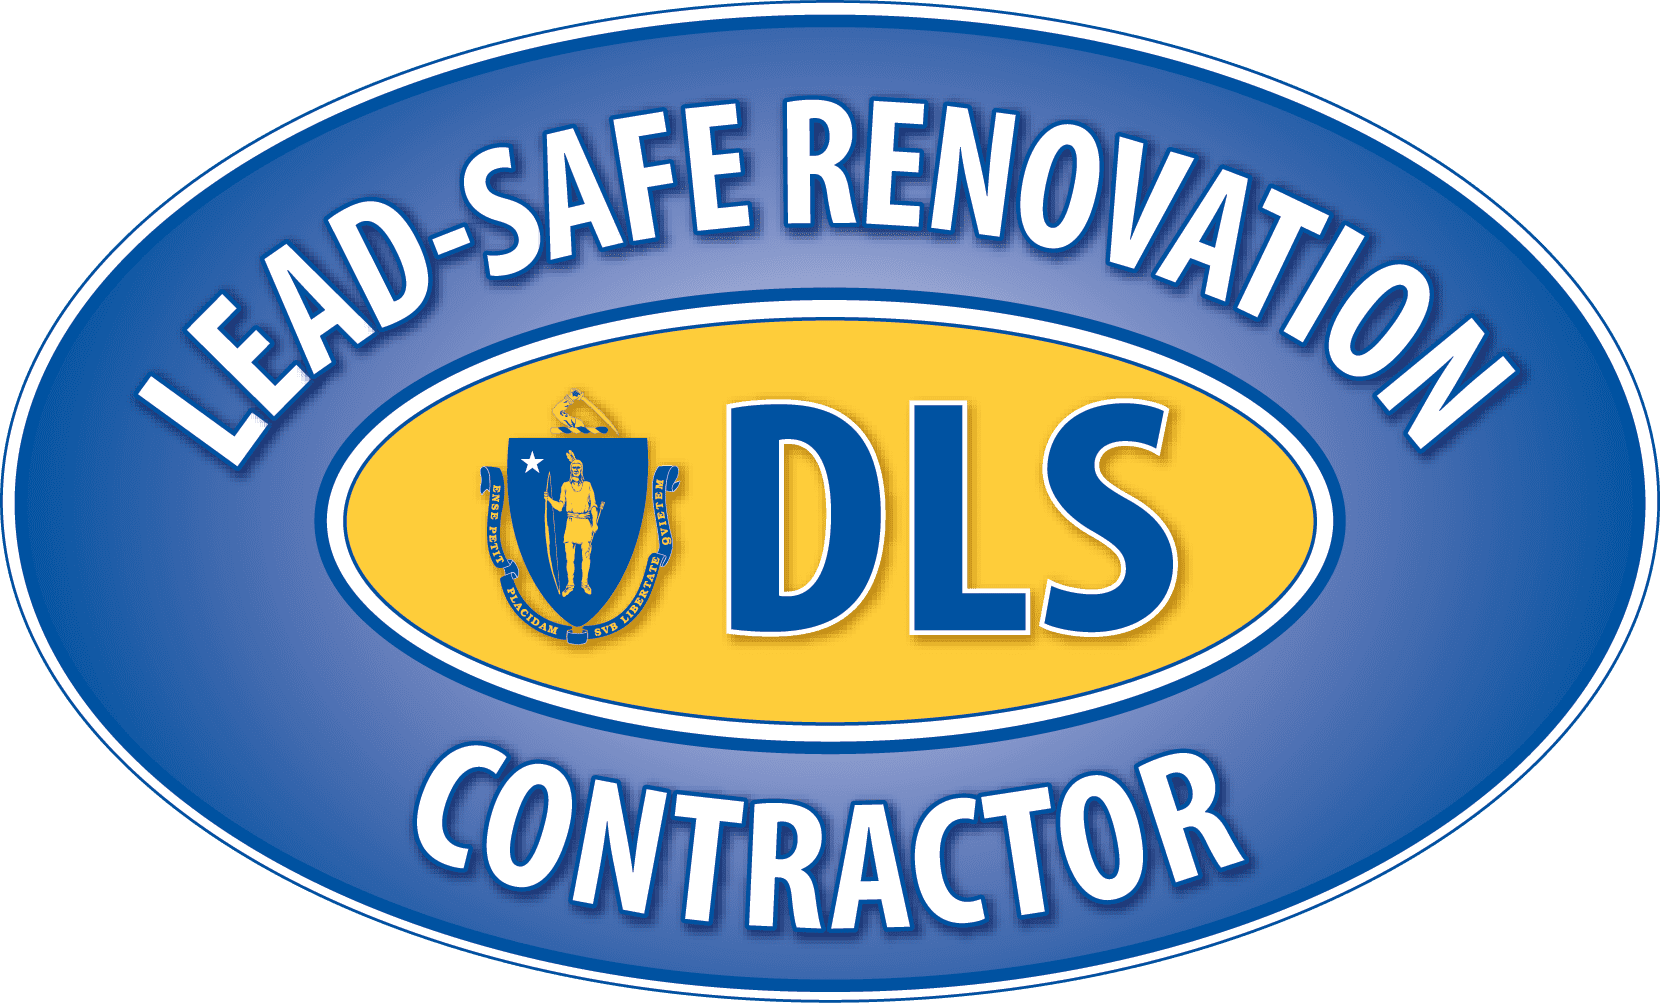 Lead Safety Renovation Certification